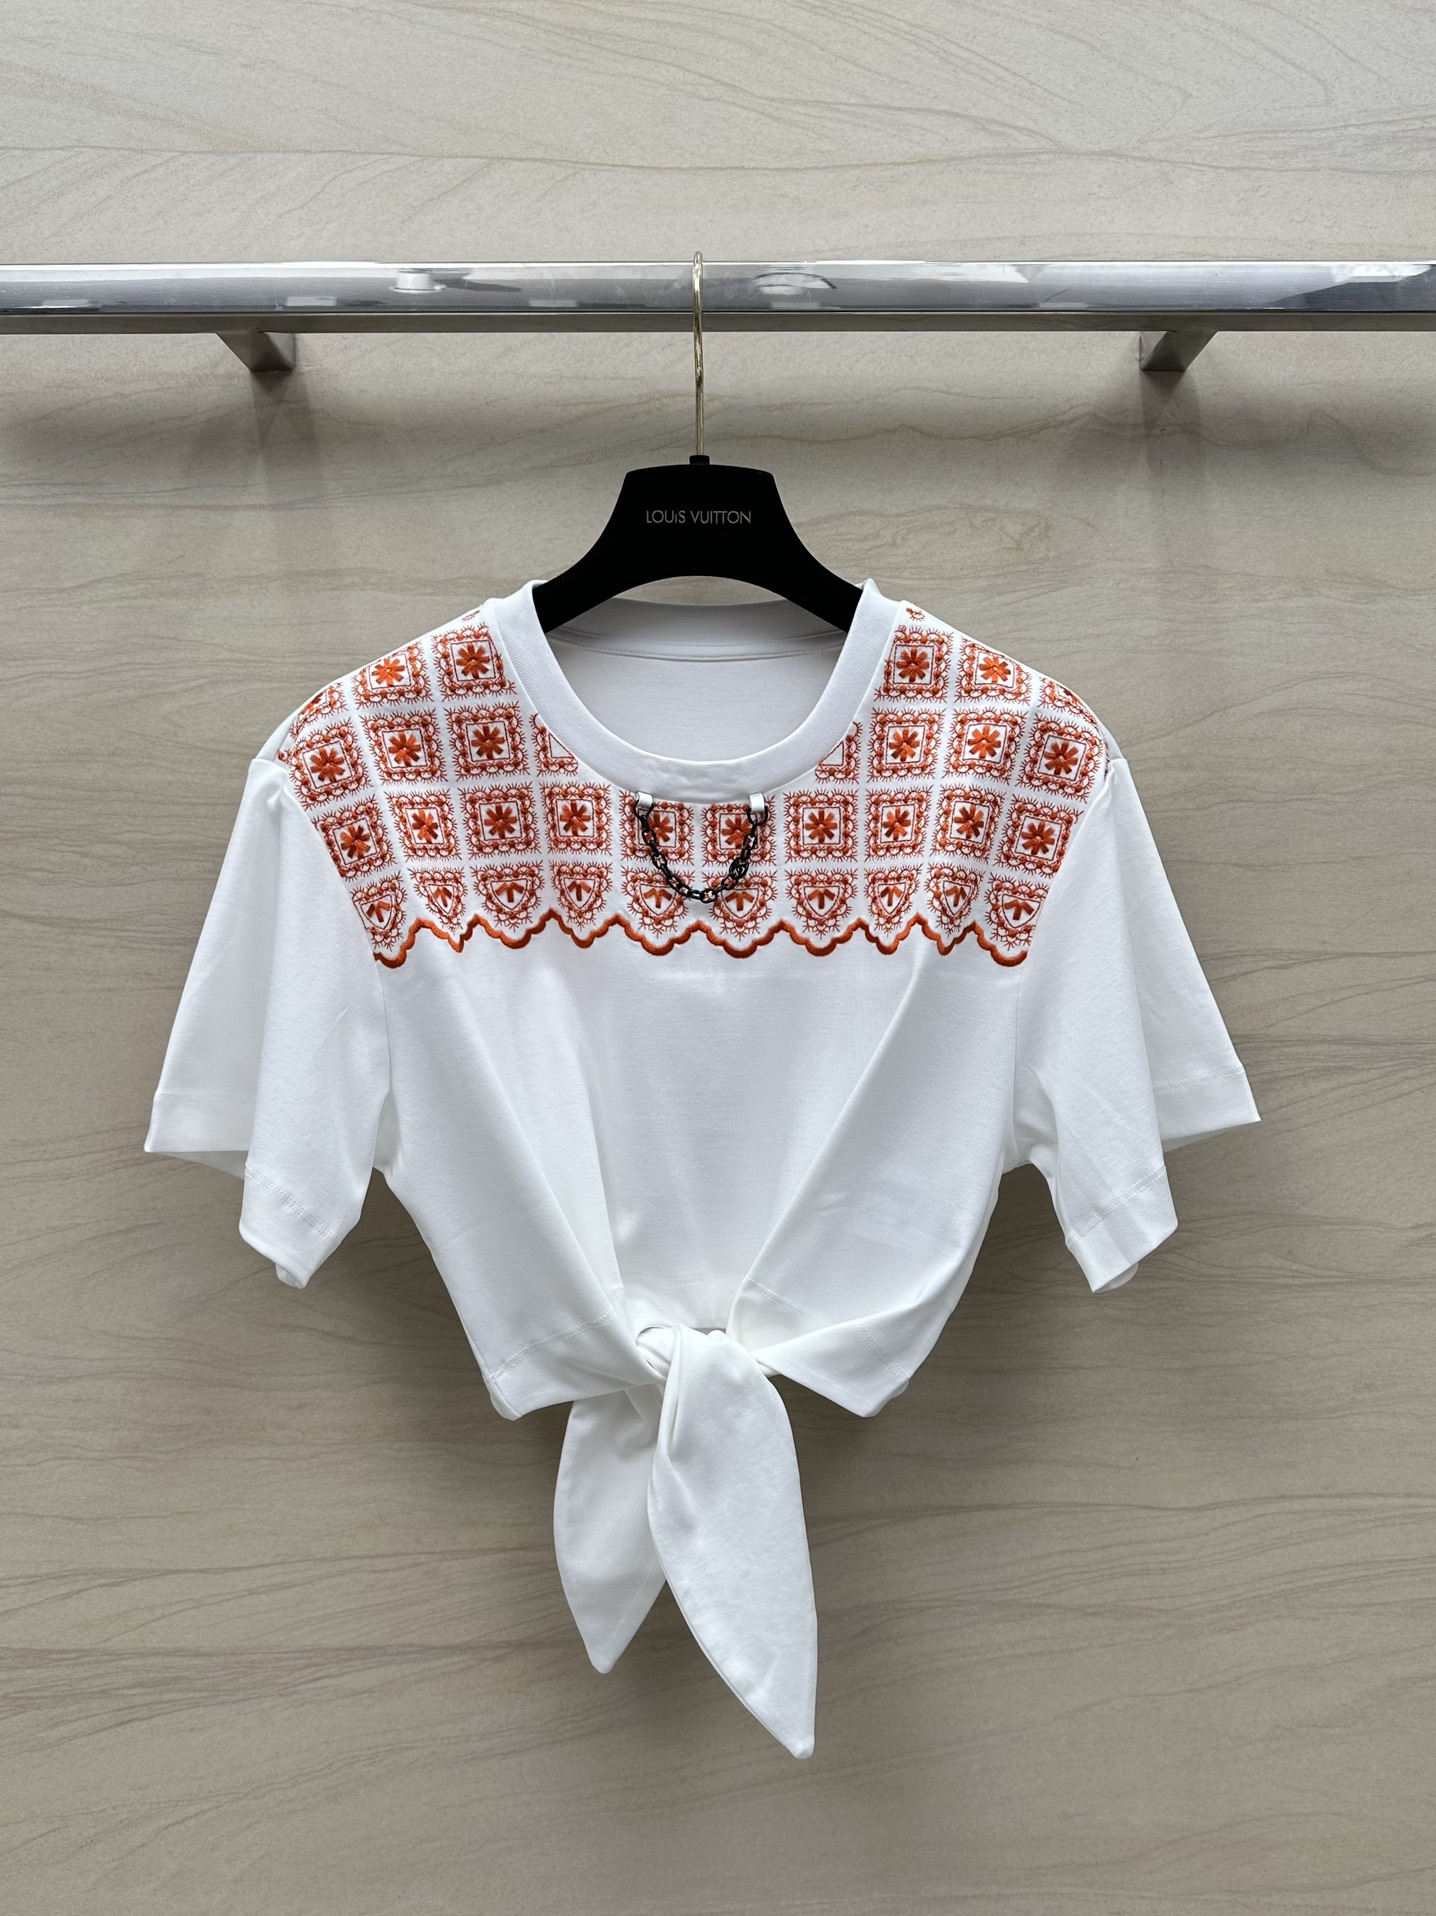 Nieuw
 Louis Vuitton Kleding T-Shirt Borduurwerk Katoen Lente/Zomercollectie Kettingen